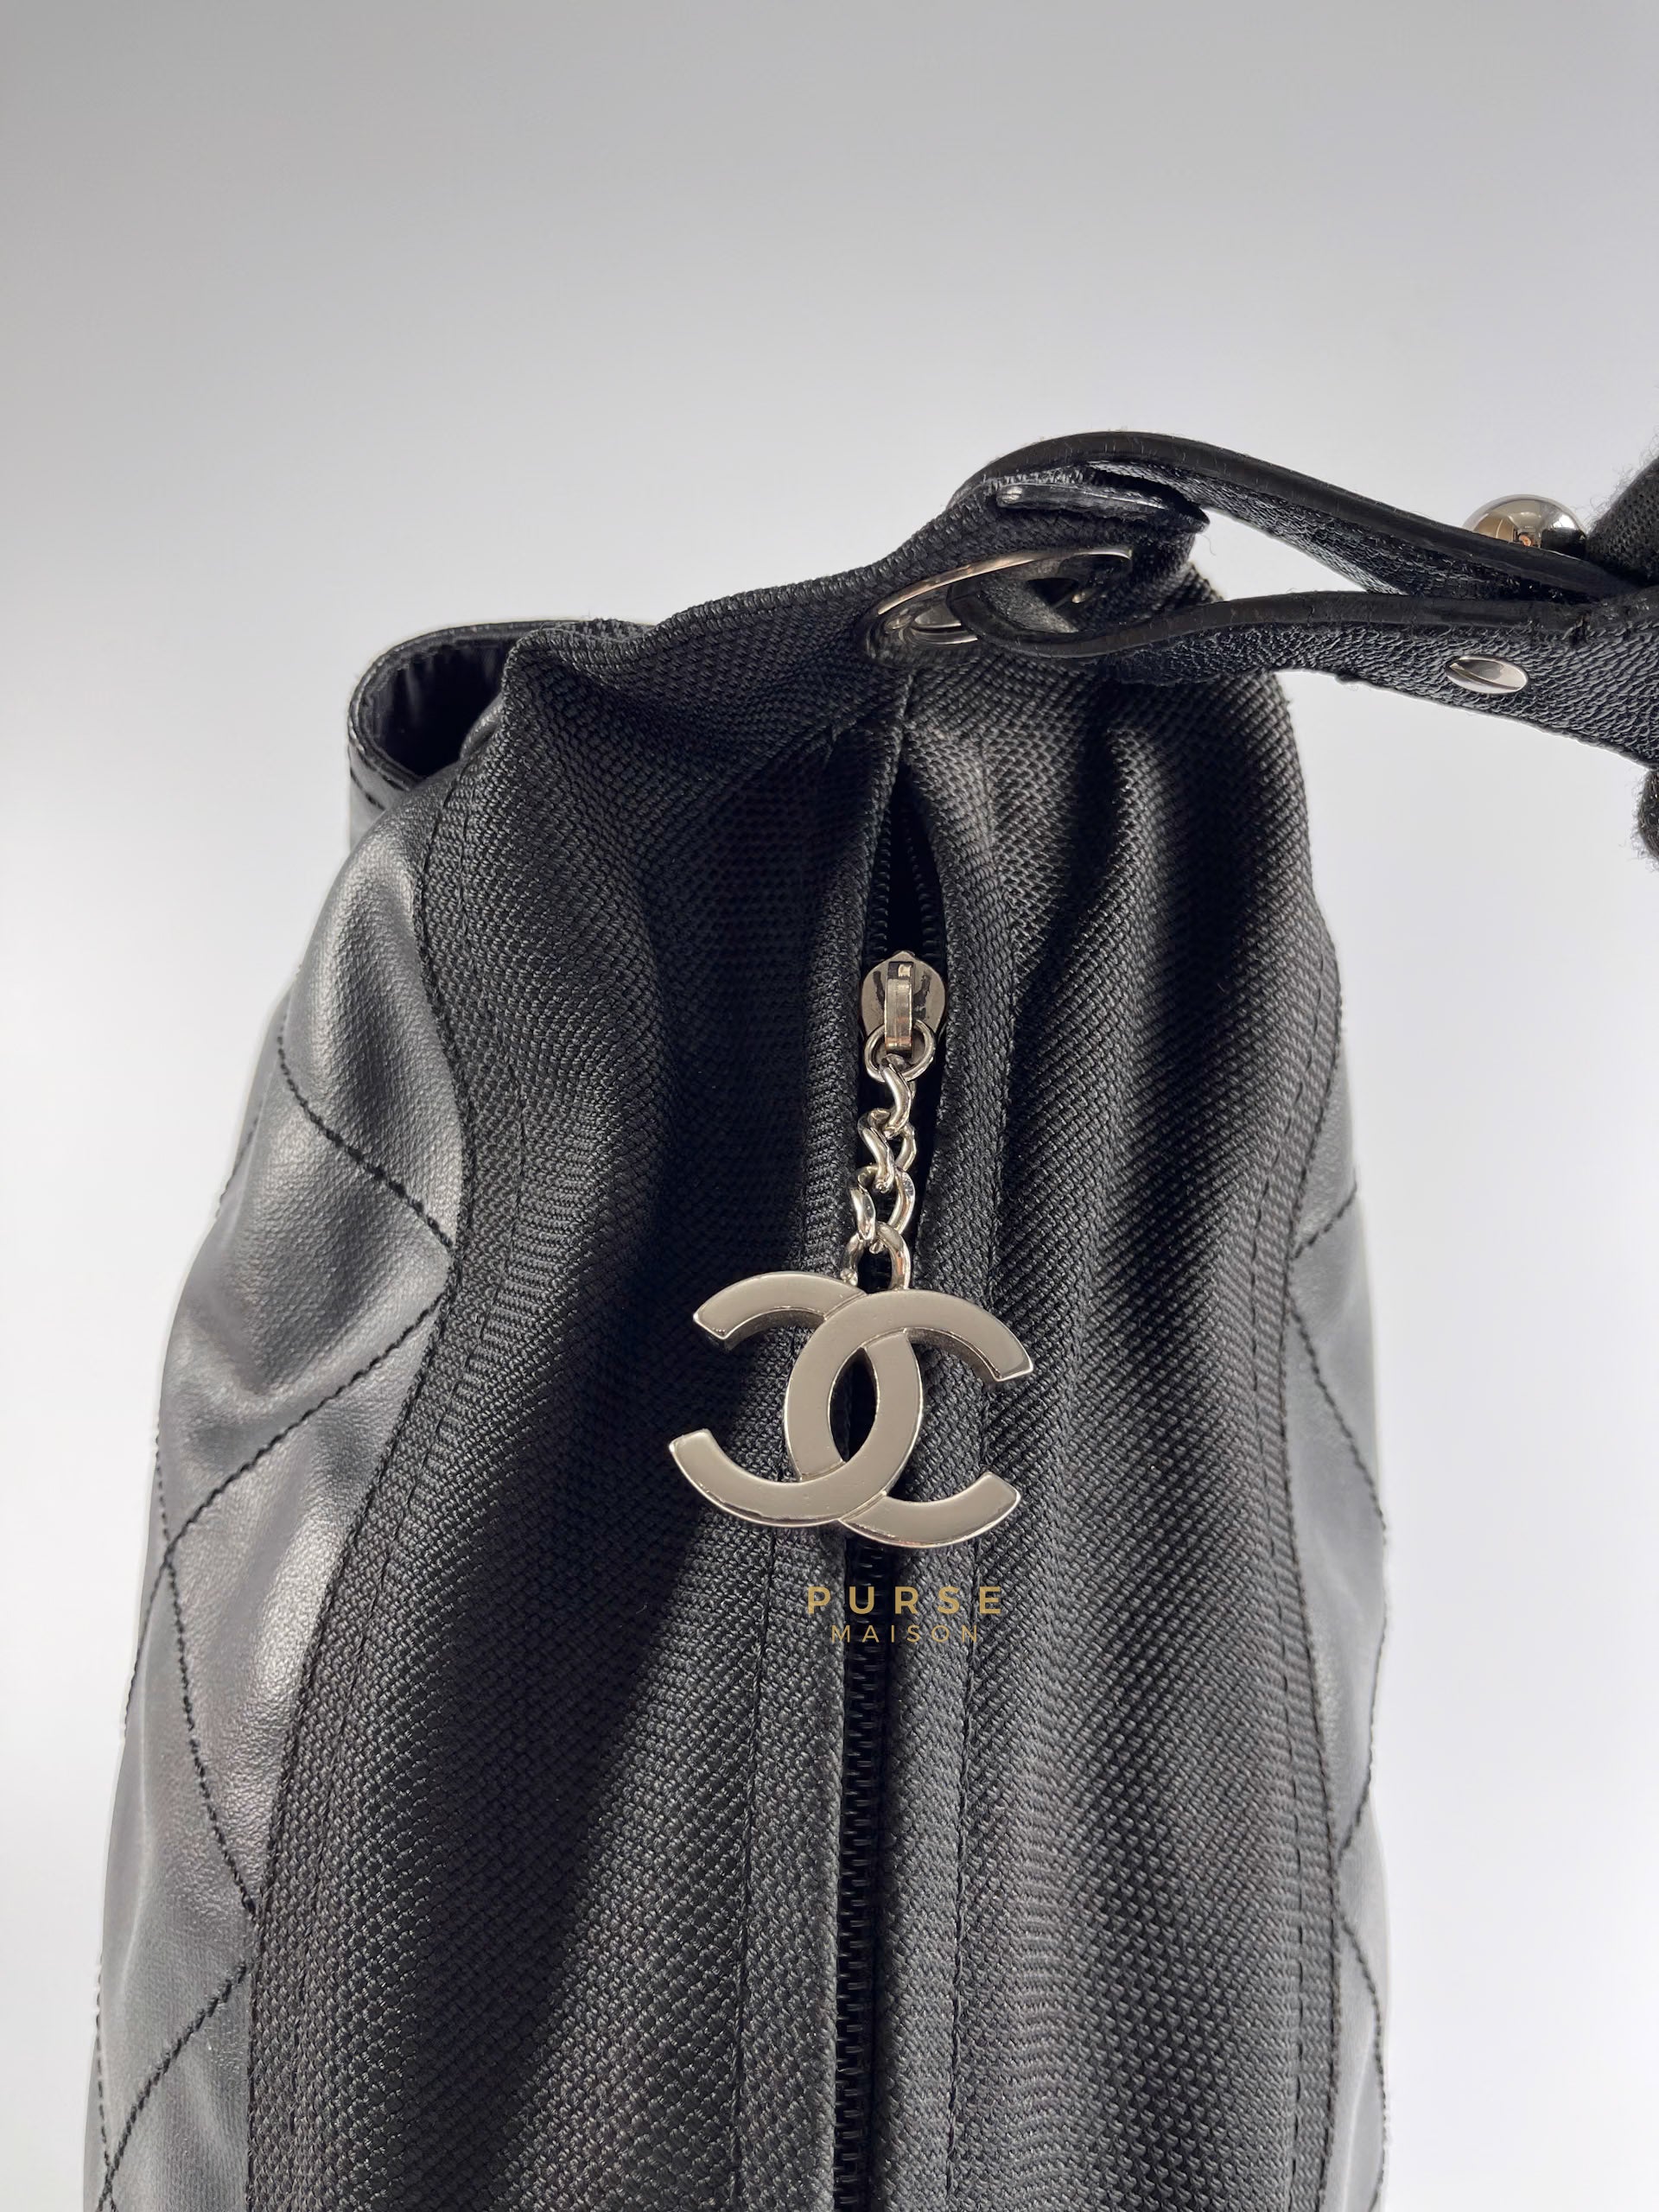 Biarritz Black Coated Canvas Hobo Bag Series 11 | Purse Maison Luxury Bags Shop